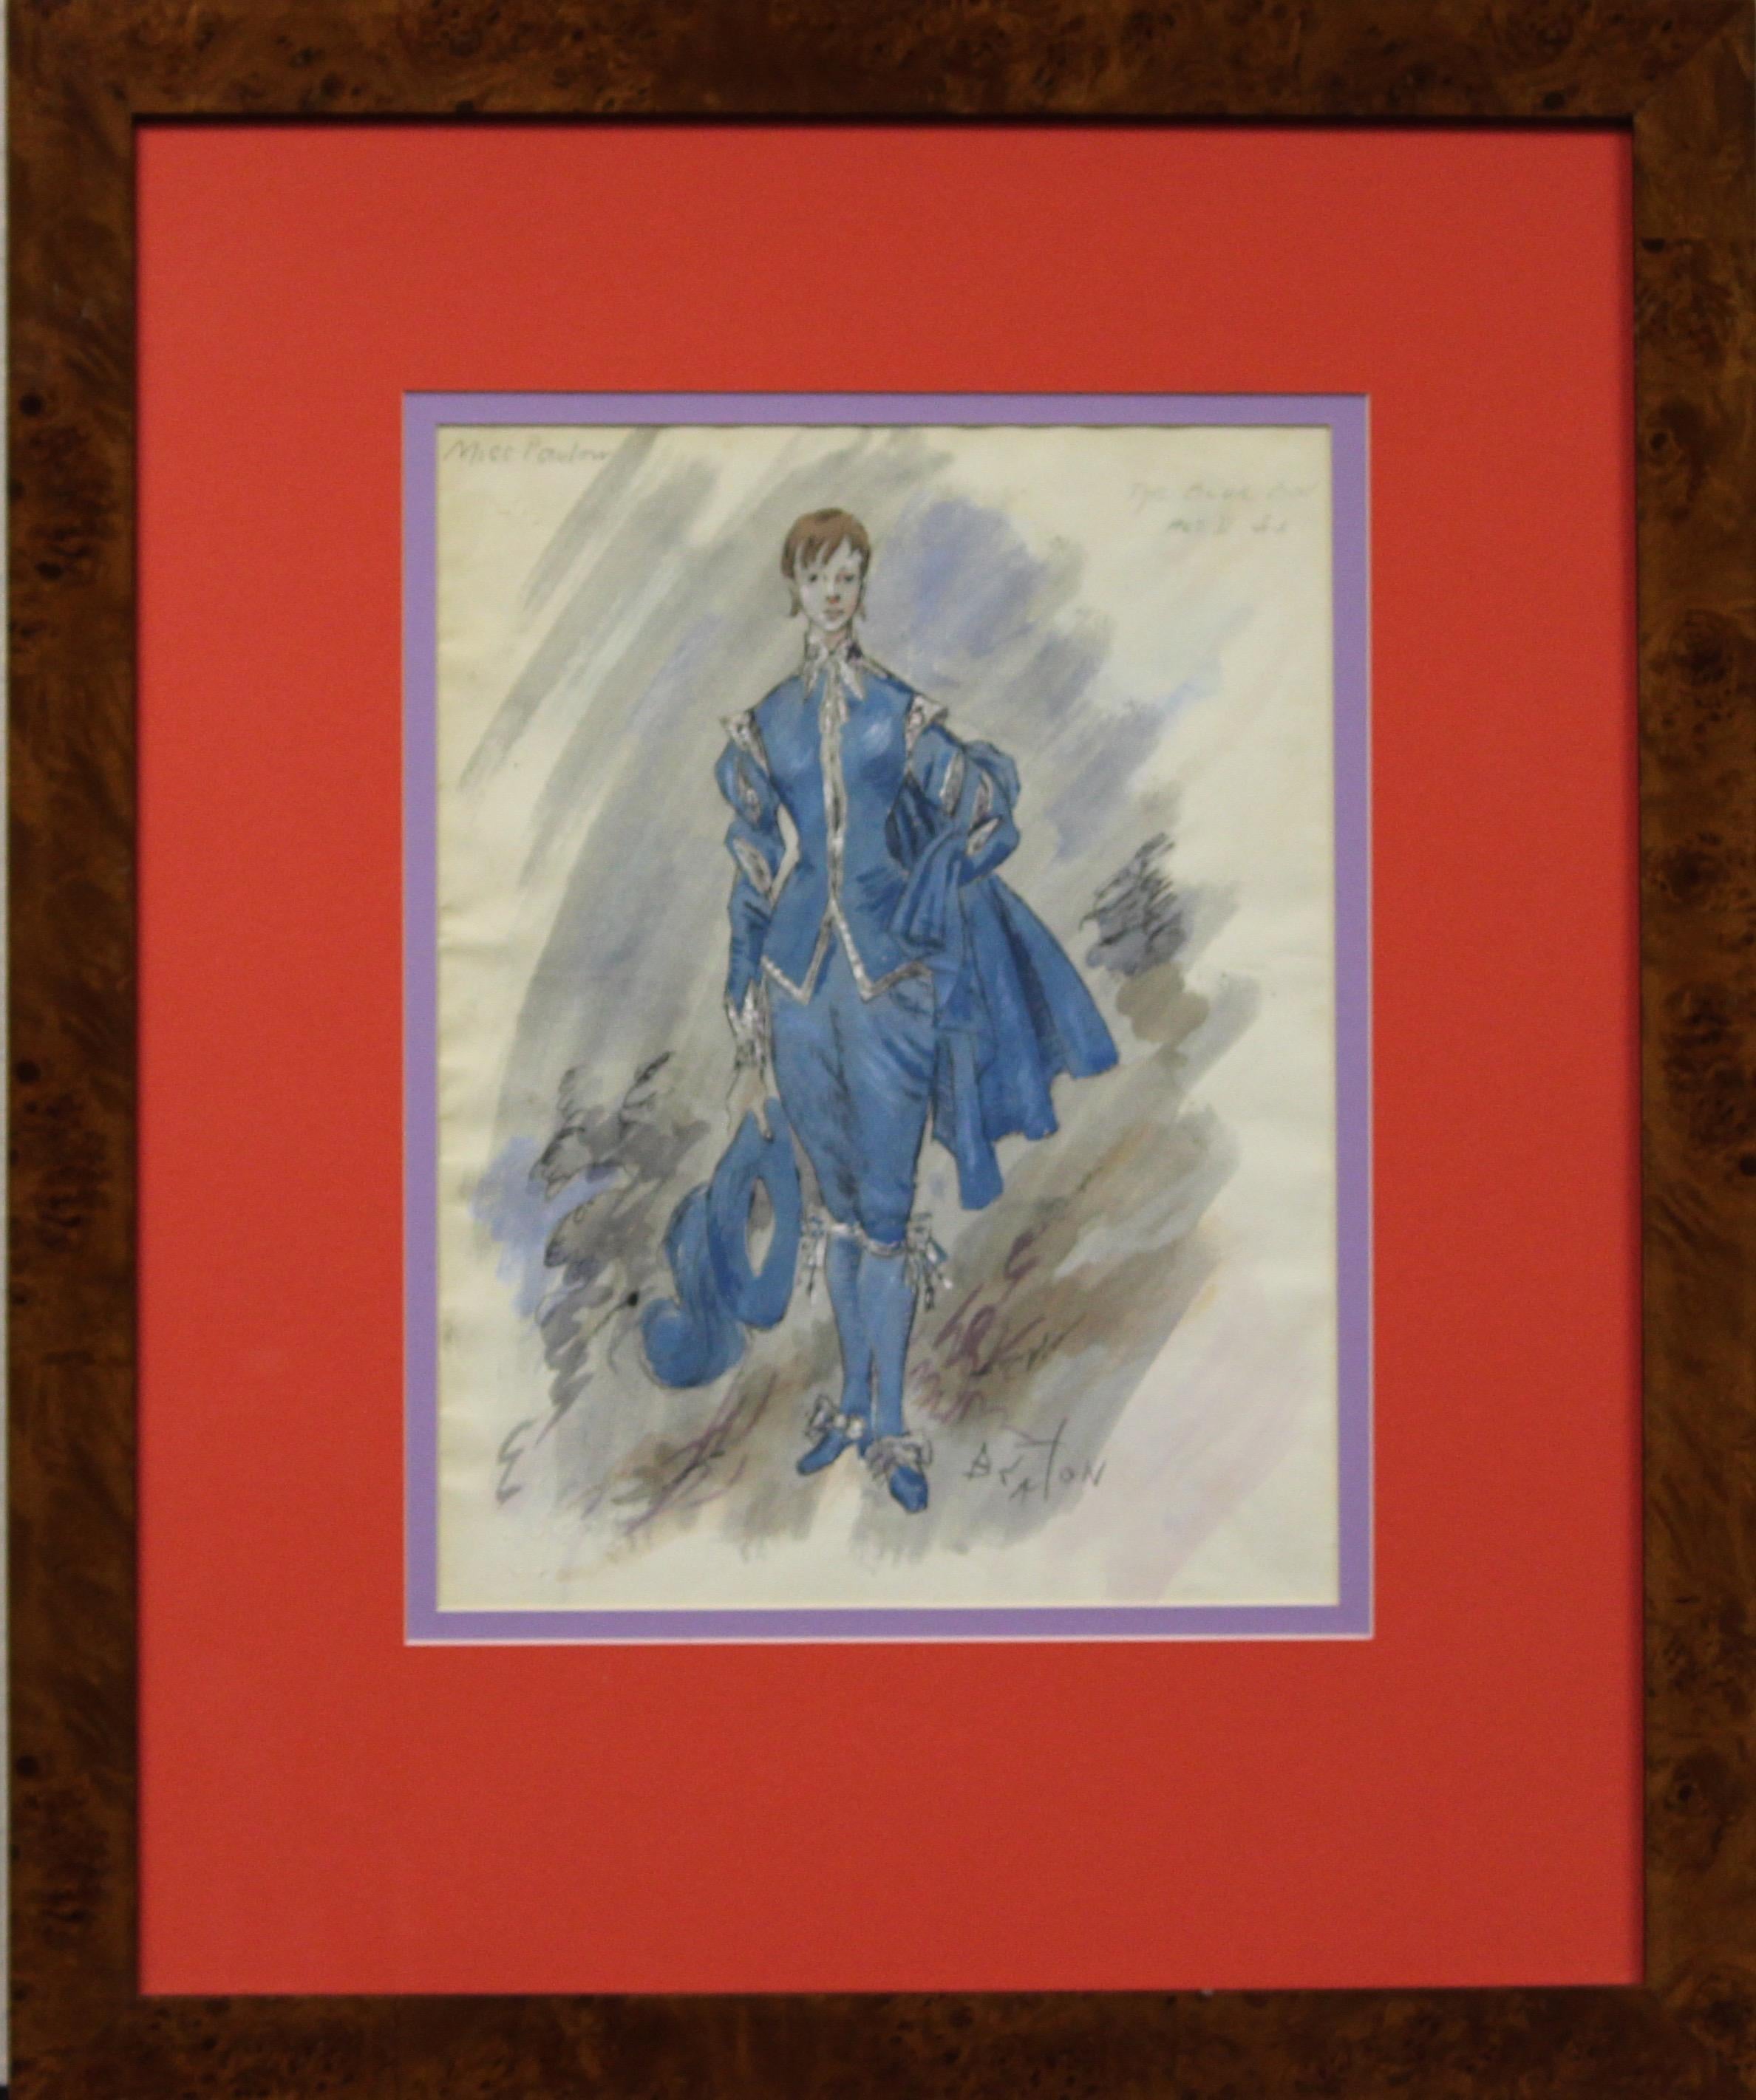 Original Cecil Beaton (1904-1980) c1950 watercolour 'The Blue Boy' Miss Paulow (UL) signed 'Beaton' (LR)

Art Sz: 14 1/2"H x 11"W

Frame Sz: 27"H x 22"W